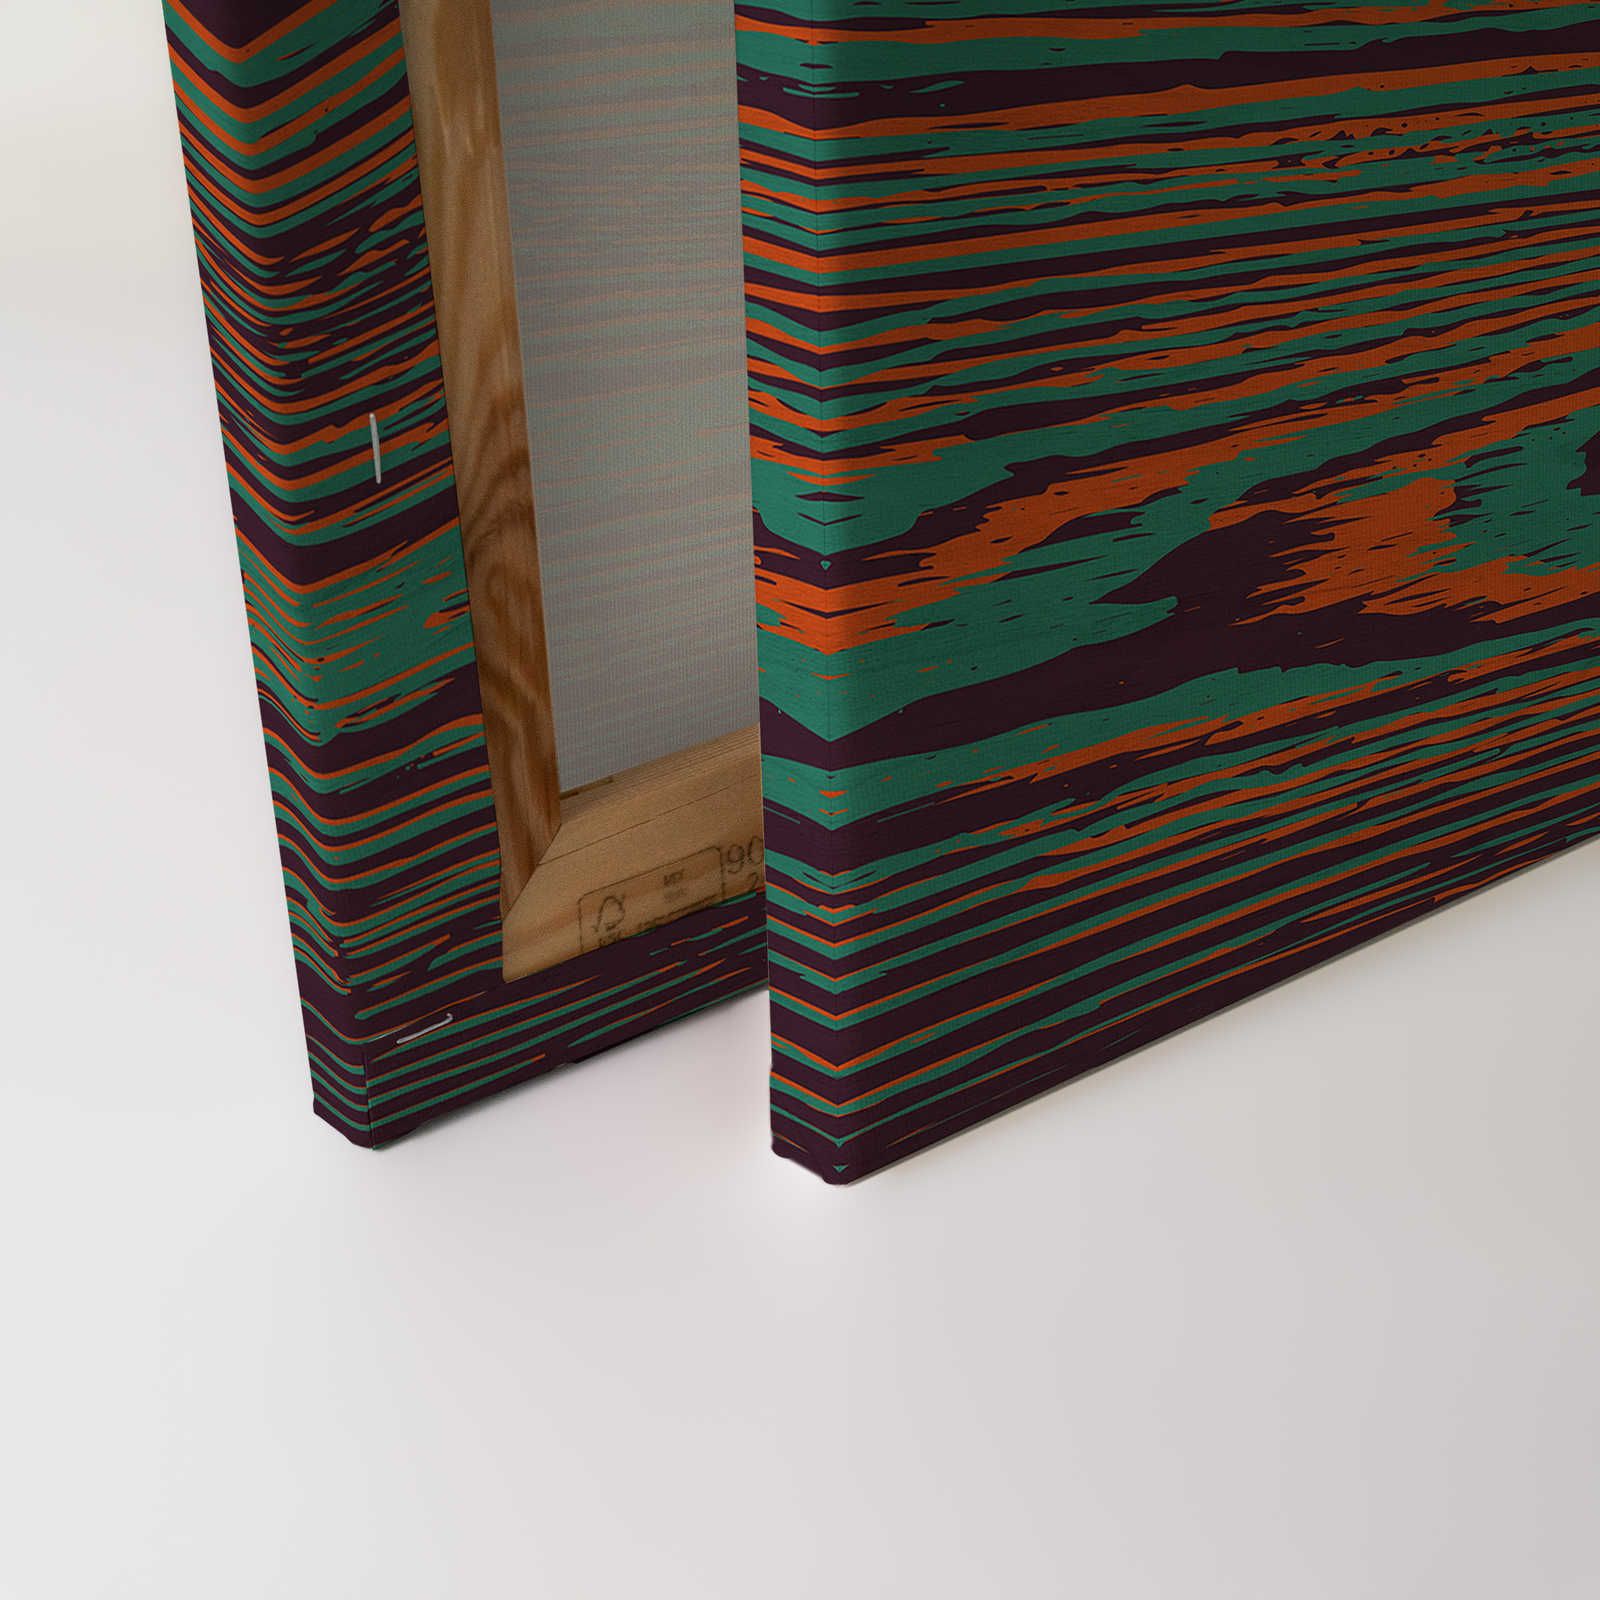             Kontiki 1 - Leinwandbild Holzmaserung Neon-Farben, Grün & Schwarz – 0,90 m x 0,60 m
        